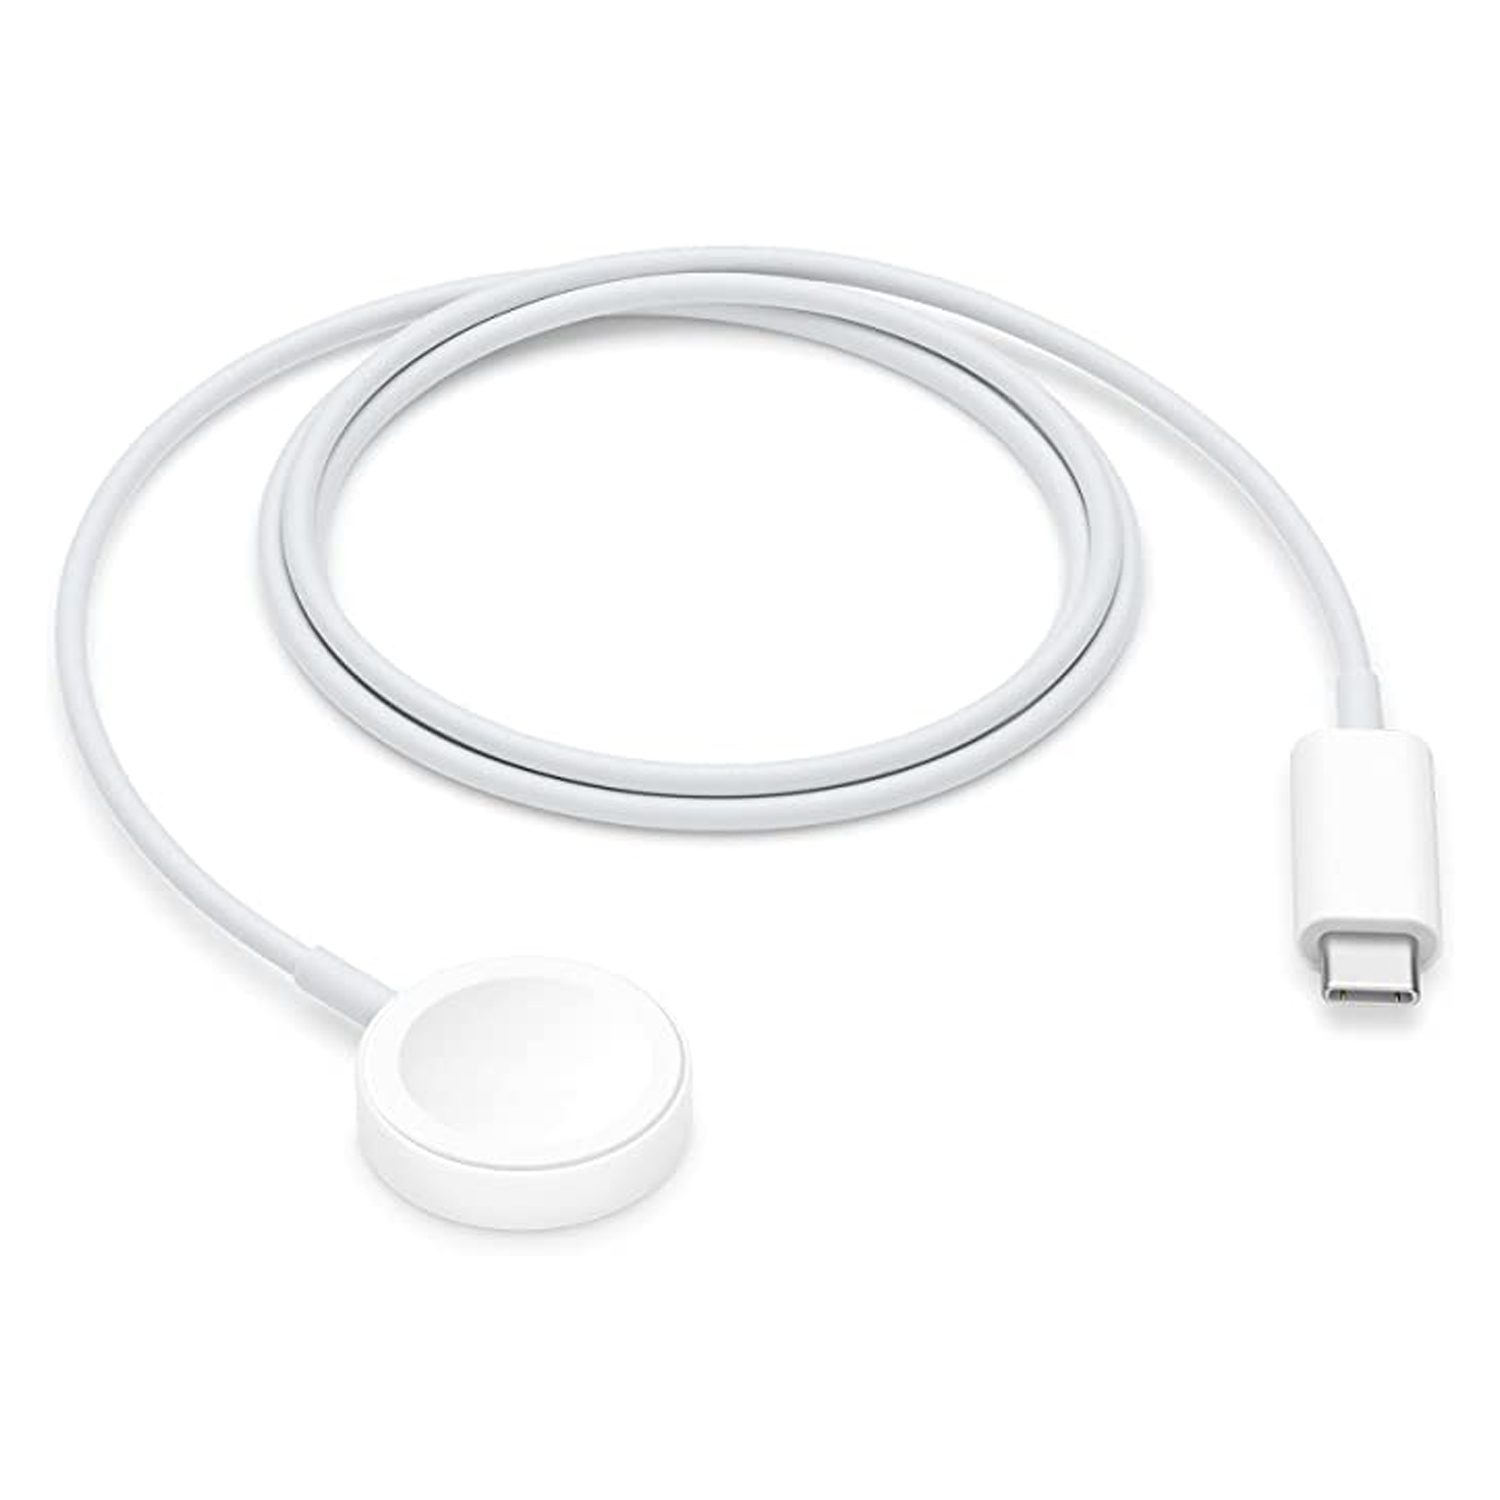 شارژر سریع مغناطیسی اپل واچ به کابل USB-C (1 متر) Apple Watch Magnetic Fast Charger to USB-C Cable (1m)